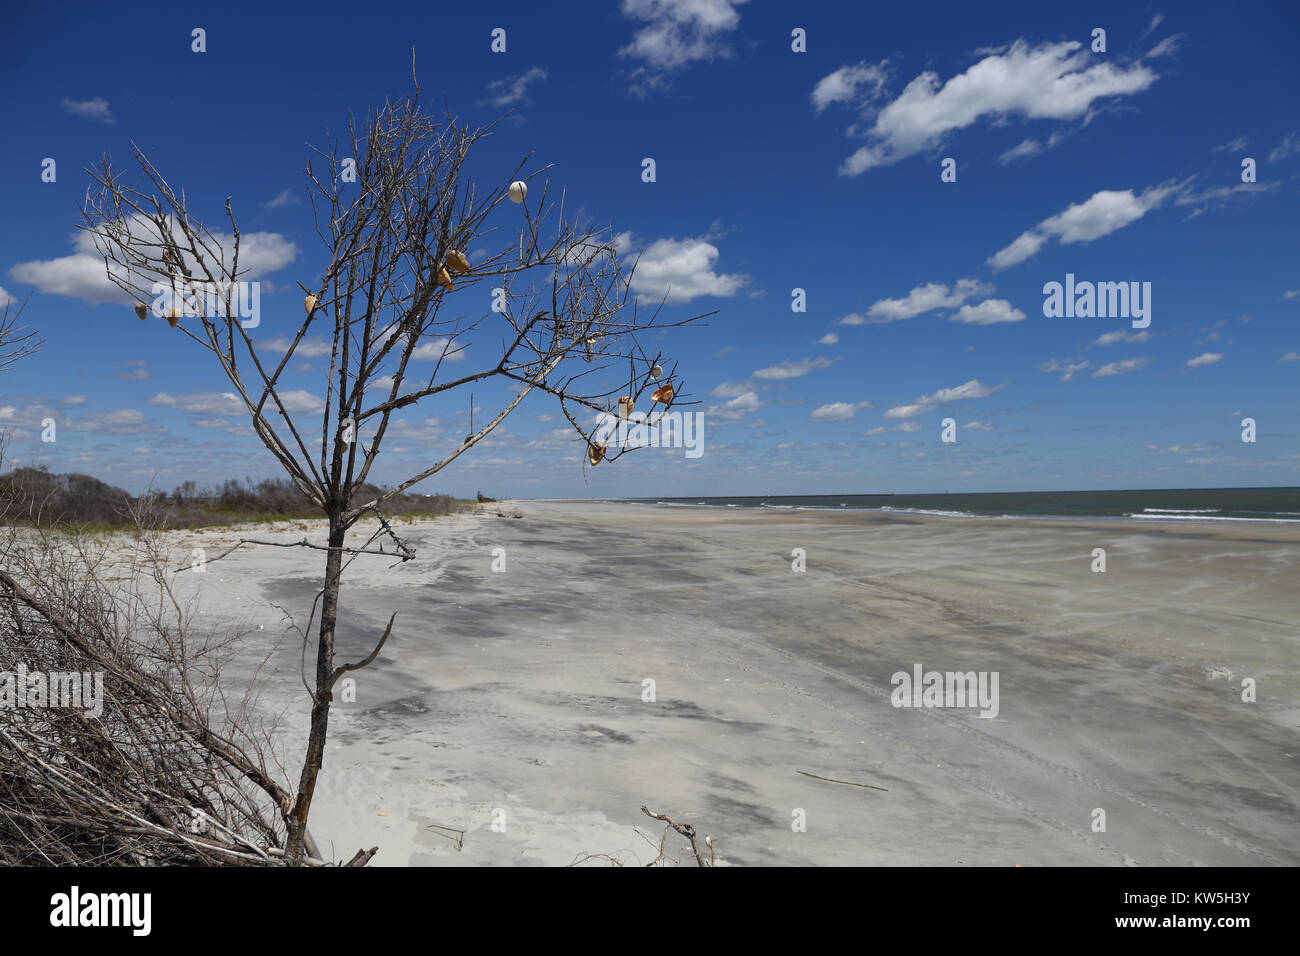 Scrub brush on a sand dune along the South Carolina coast is decorated with sea shells. Stock Photo